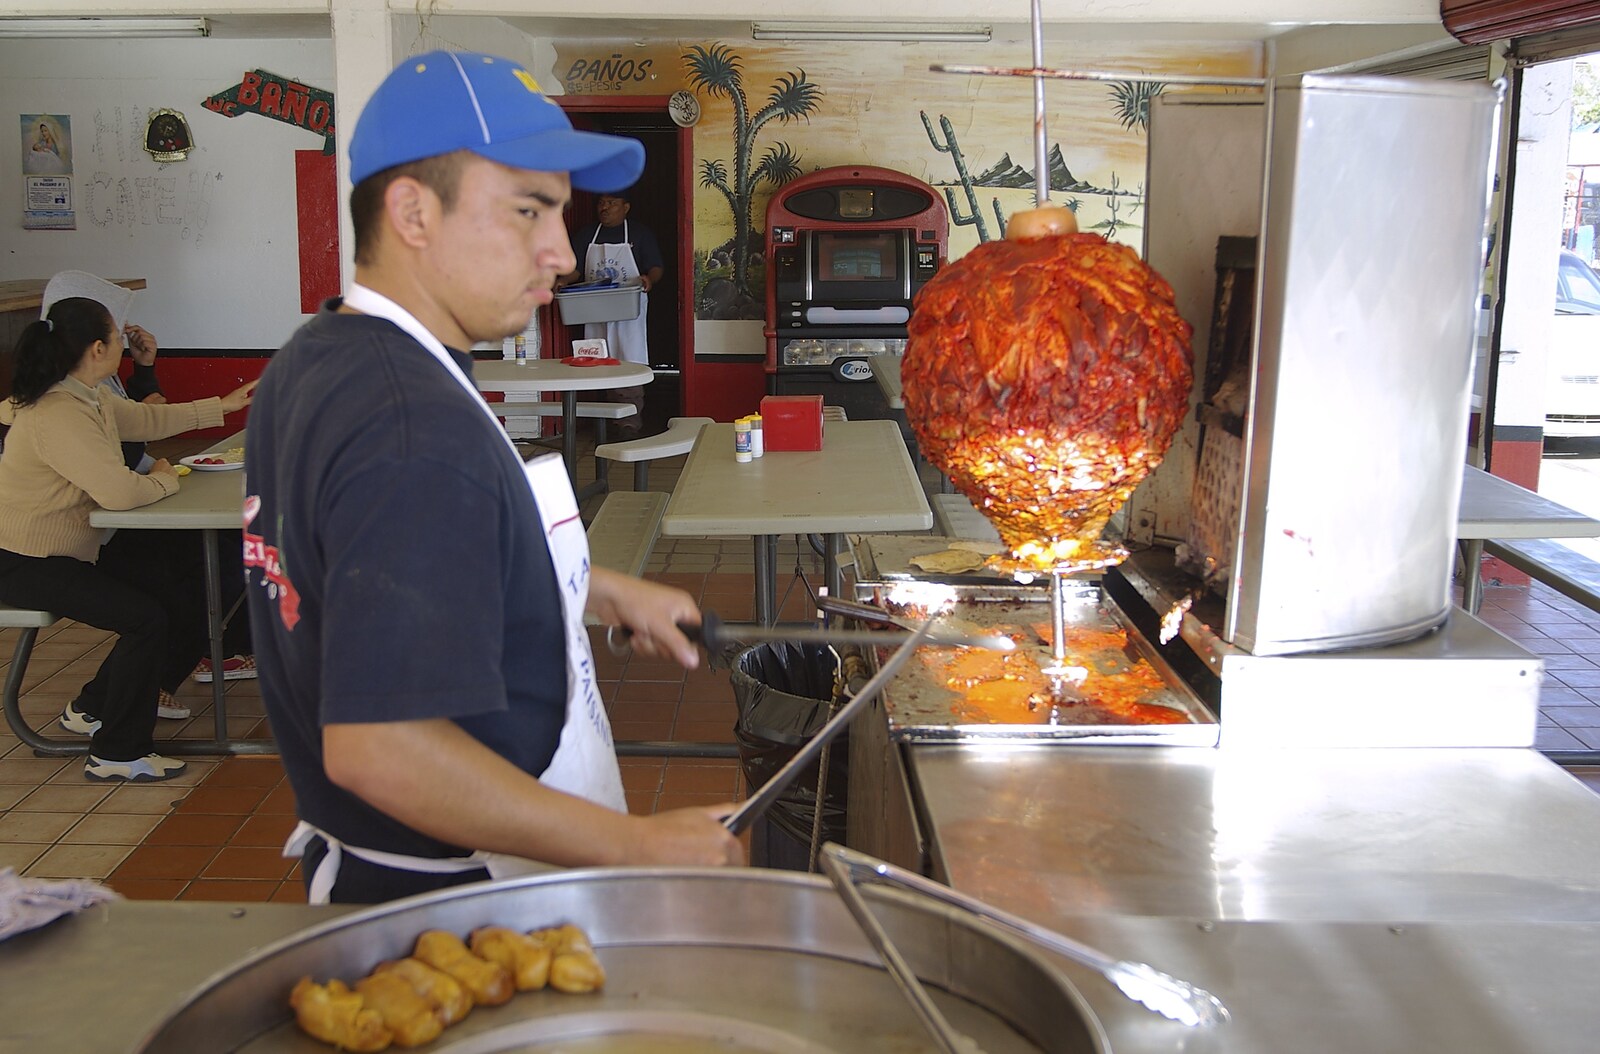 Rosarito and Tijuana, Baja California, Mexico - 2nd March 2008: The taco dude prepares to slice the al pastor pork